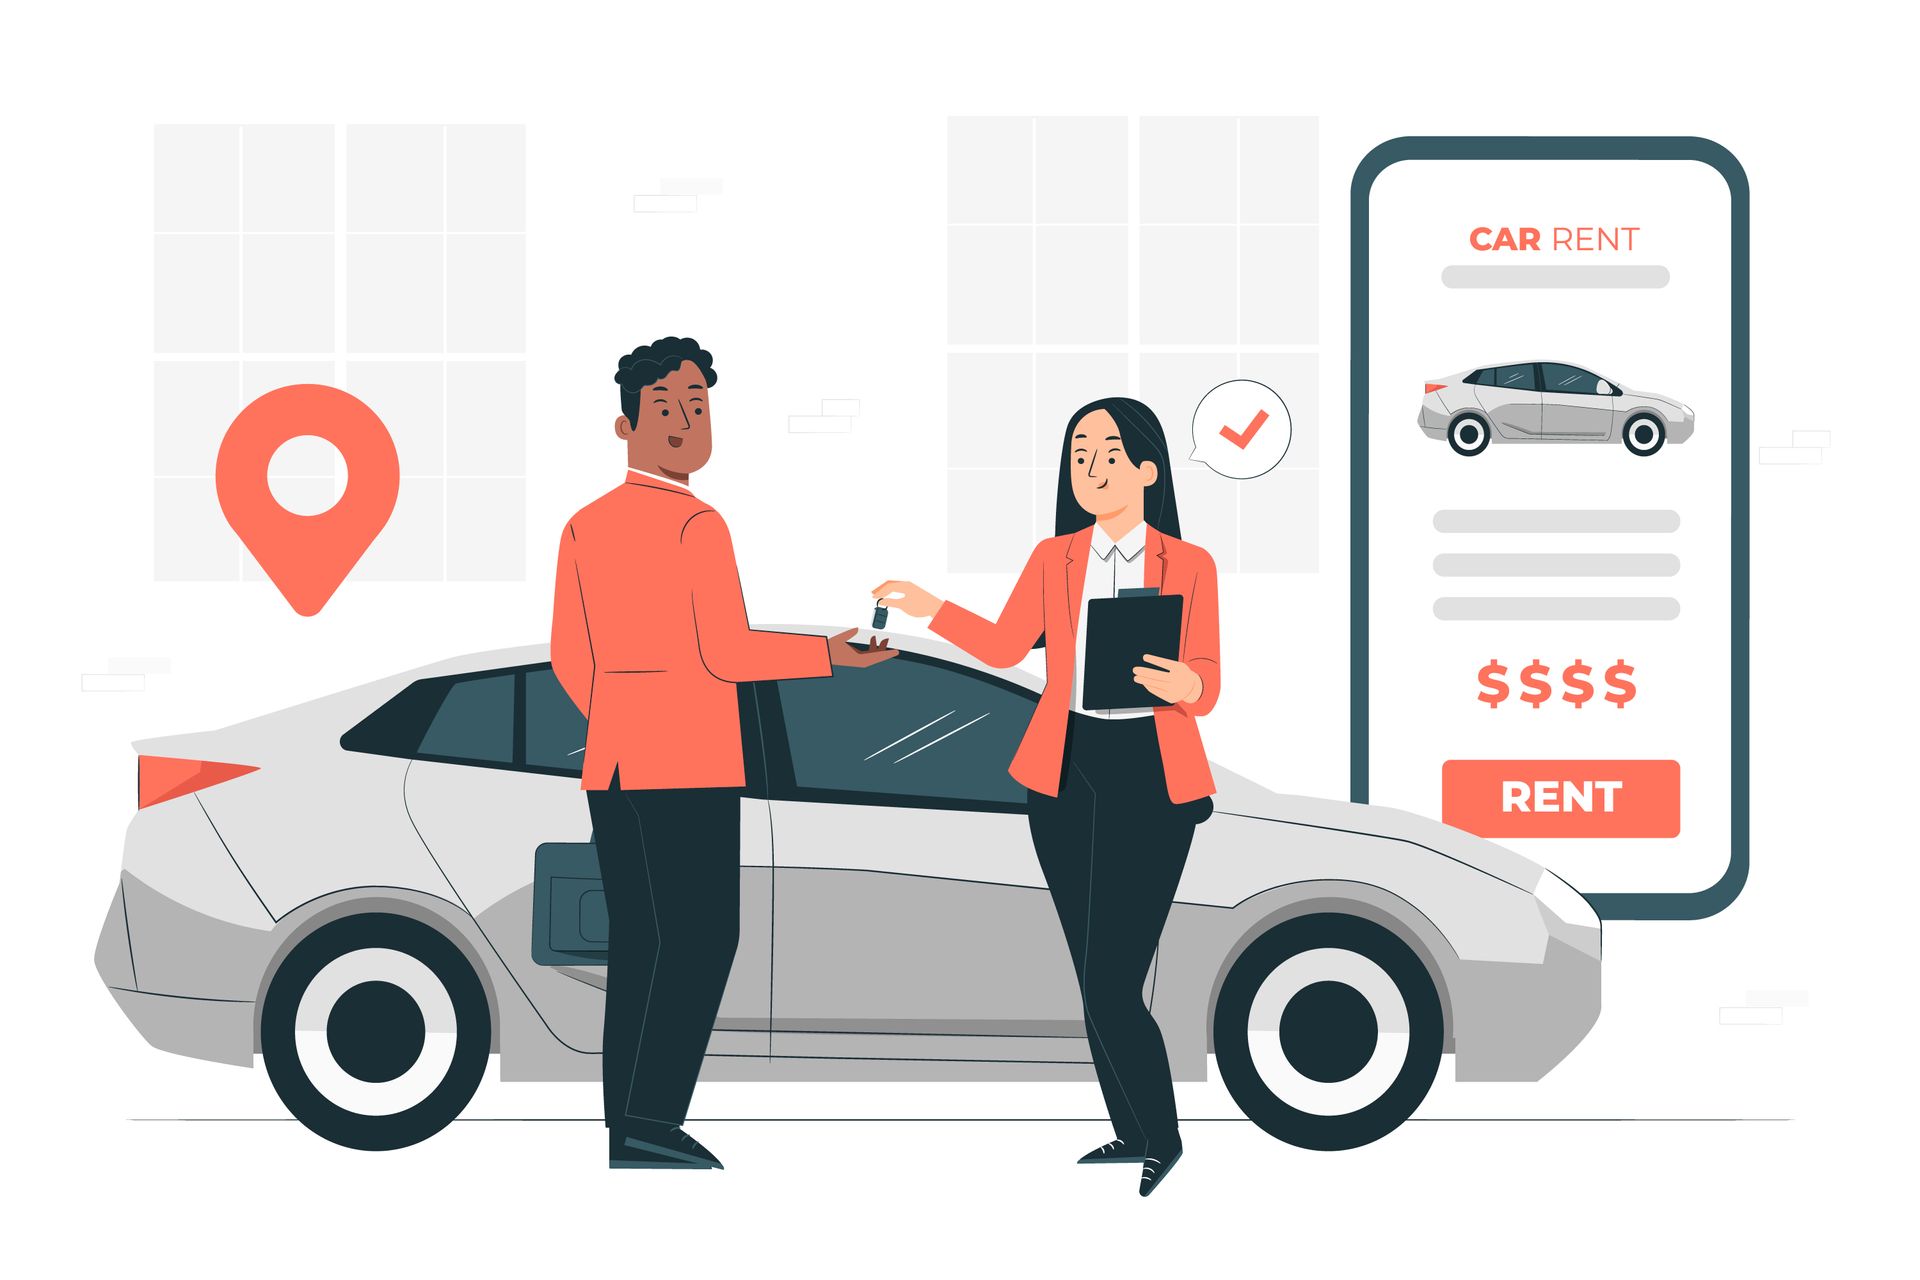 Save money on your next car rental